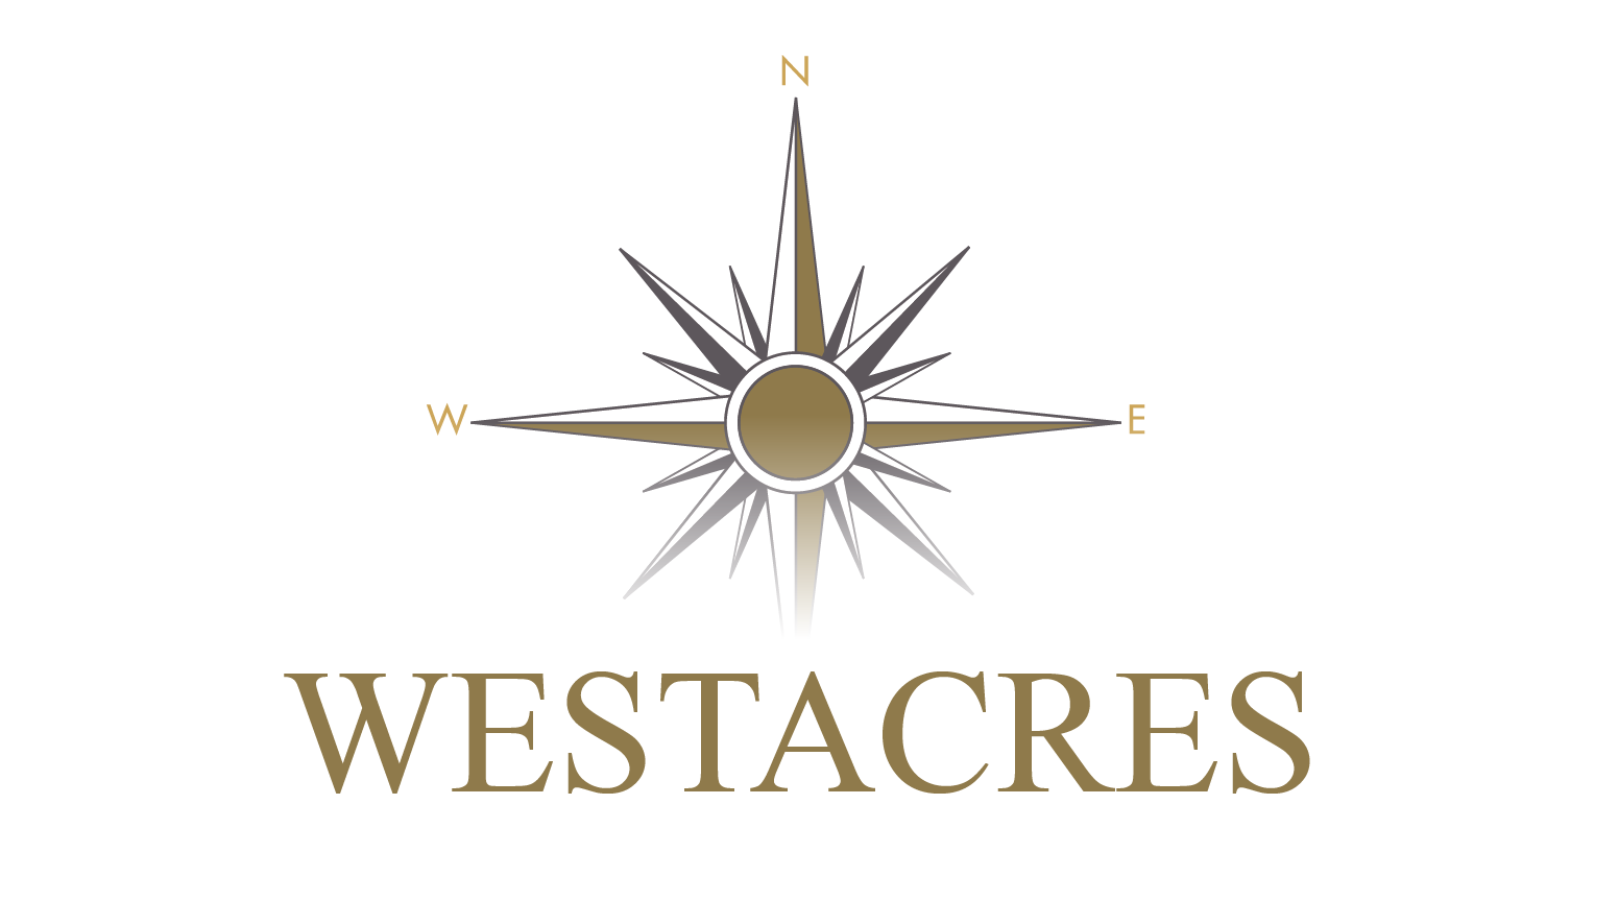 Westacres confirms sponsorship of Young Leader Award